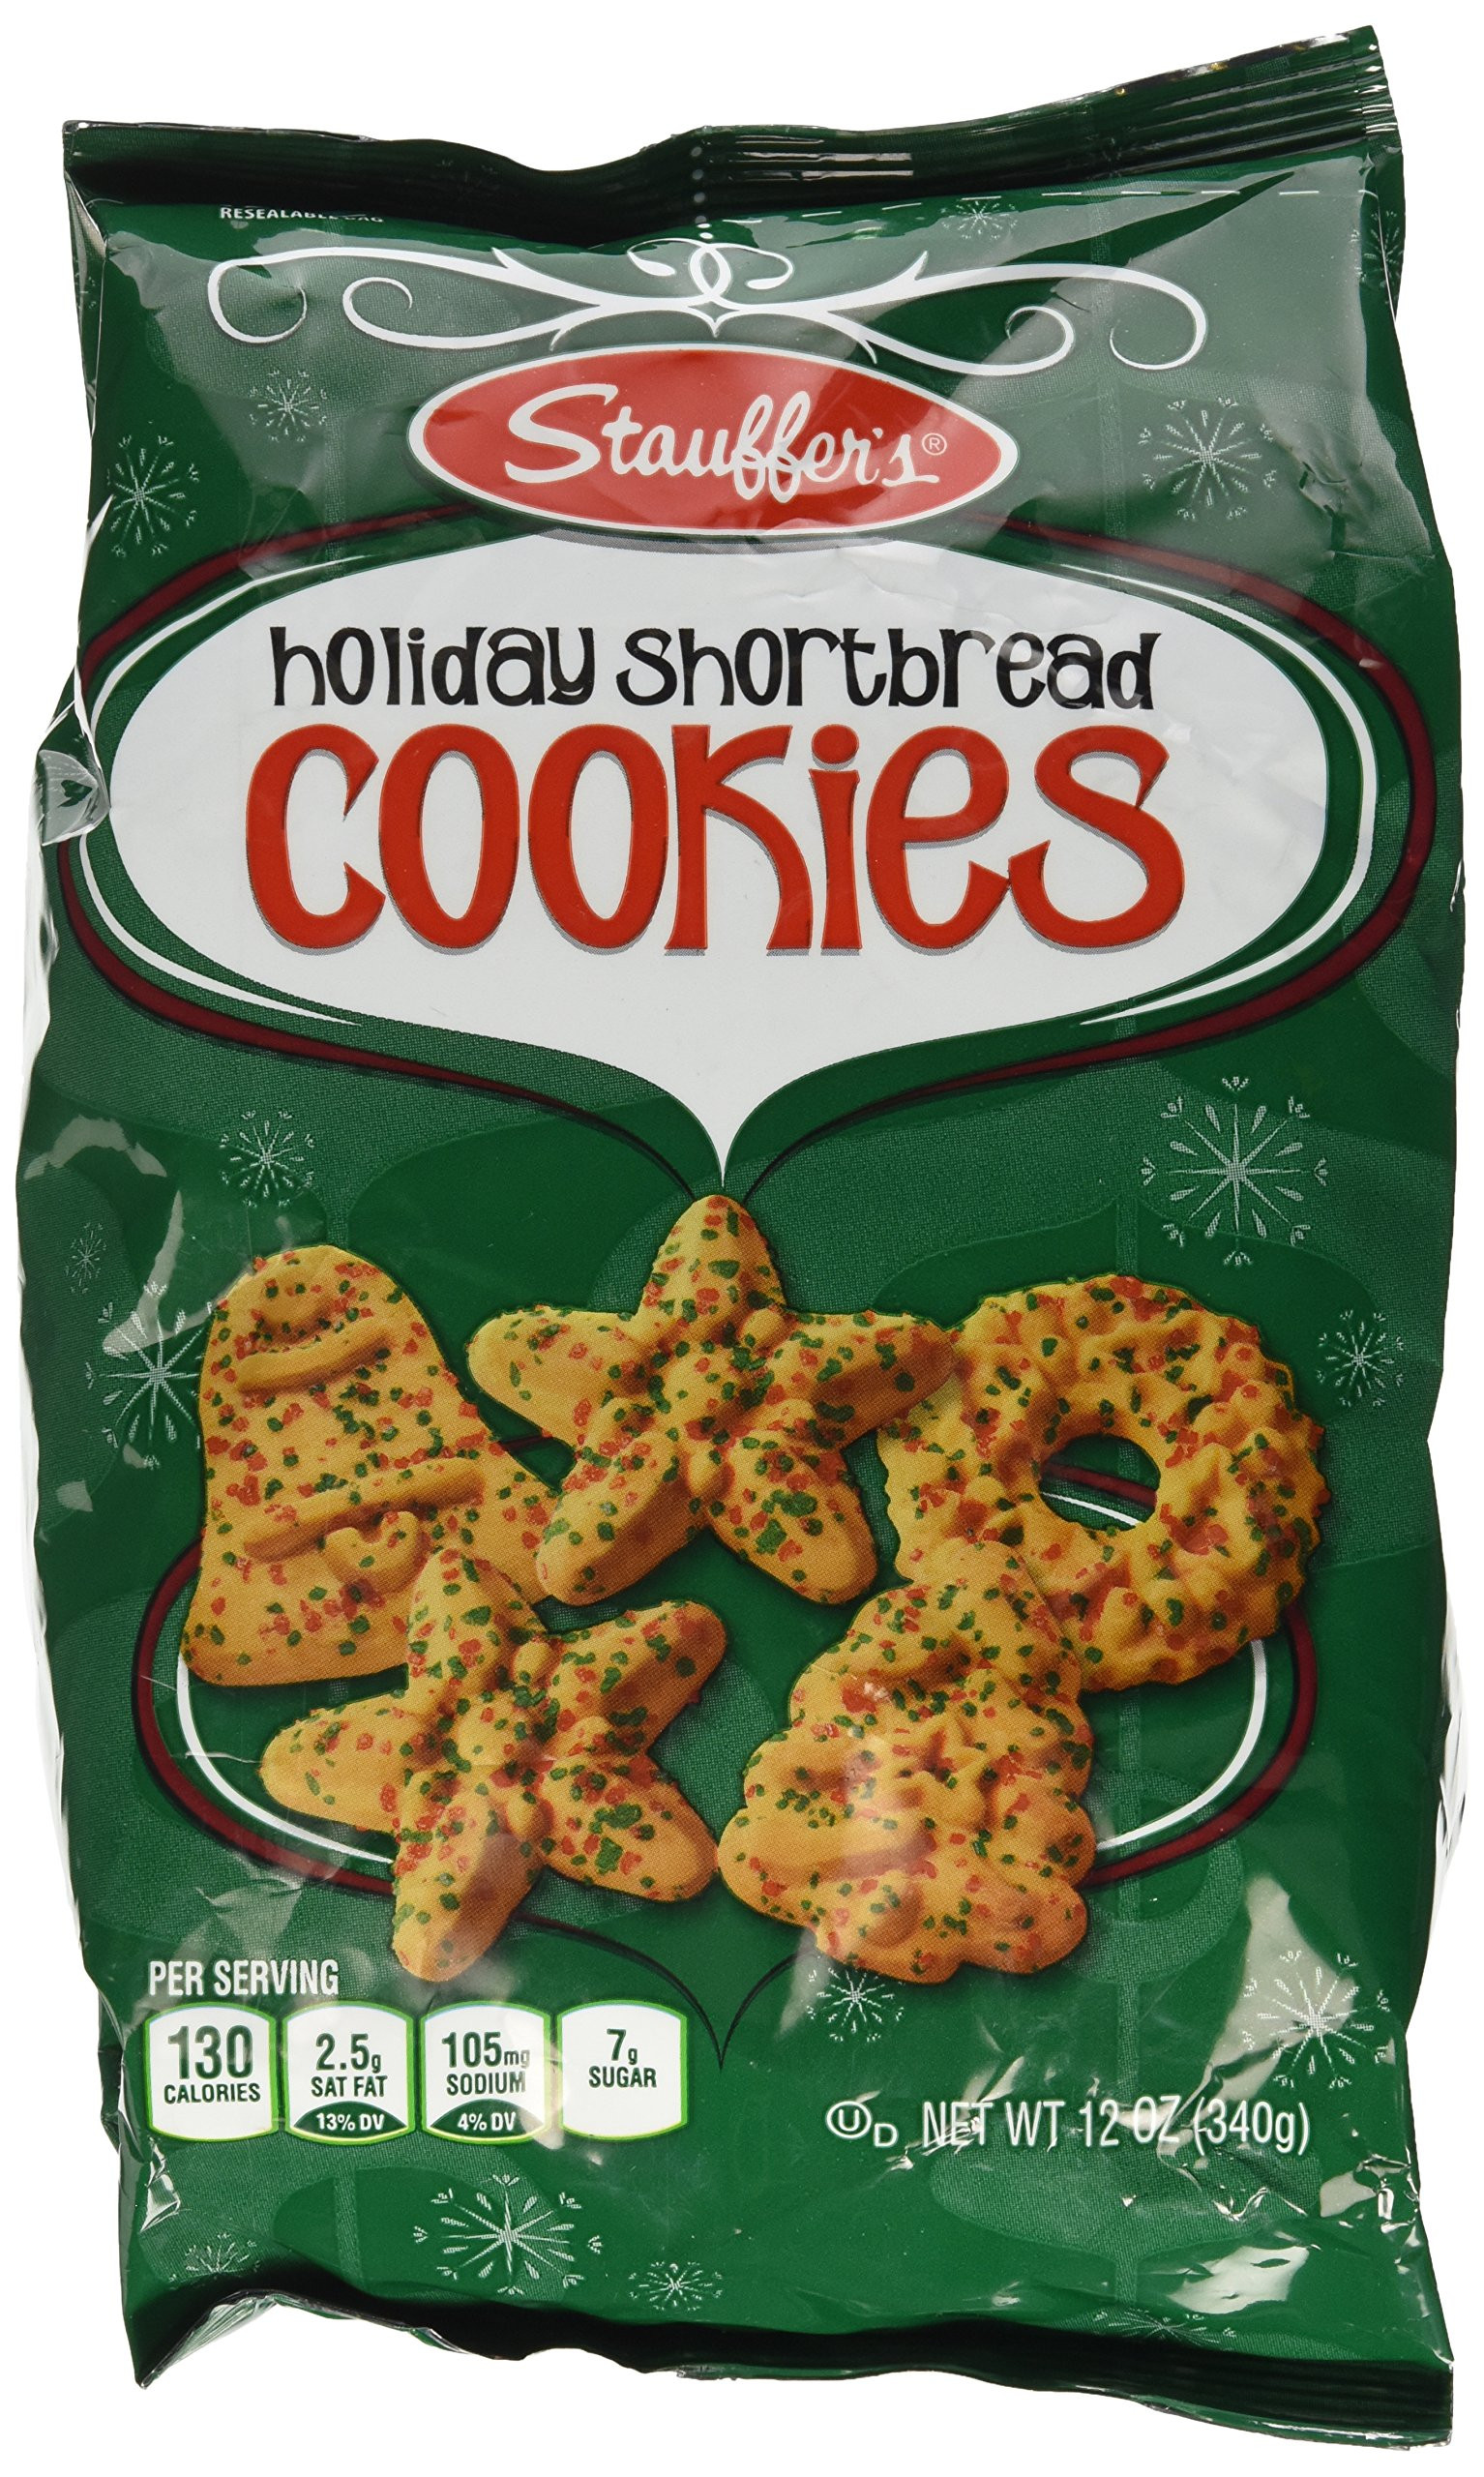 Stauffers Christmas Cookies
 Amazon Stauffer s White Fudge Shortbread Cookies for